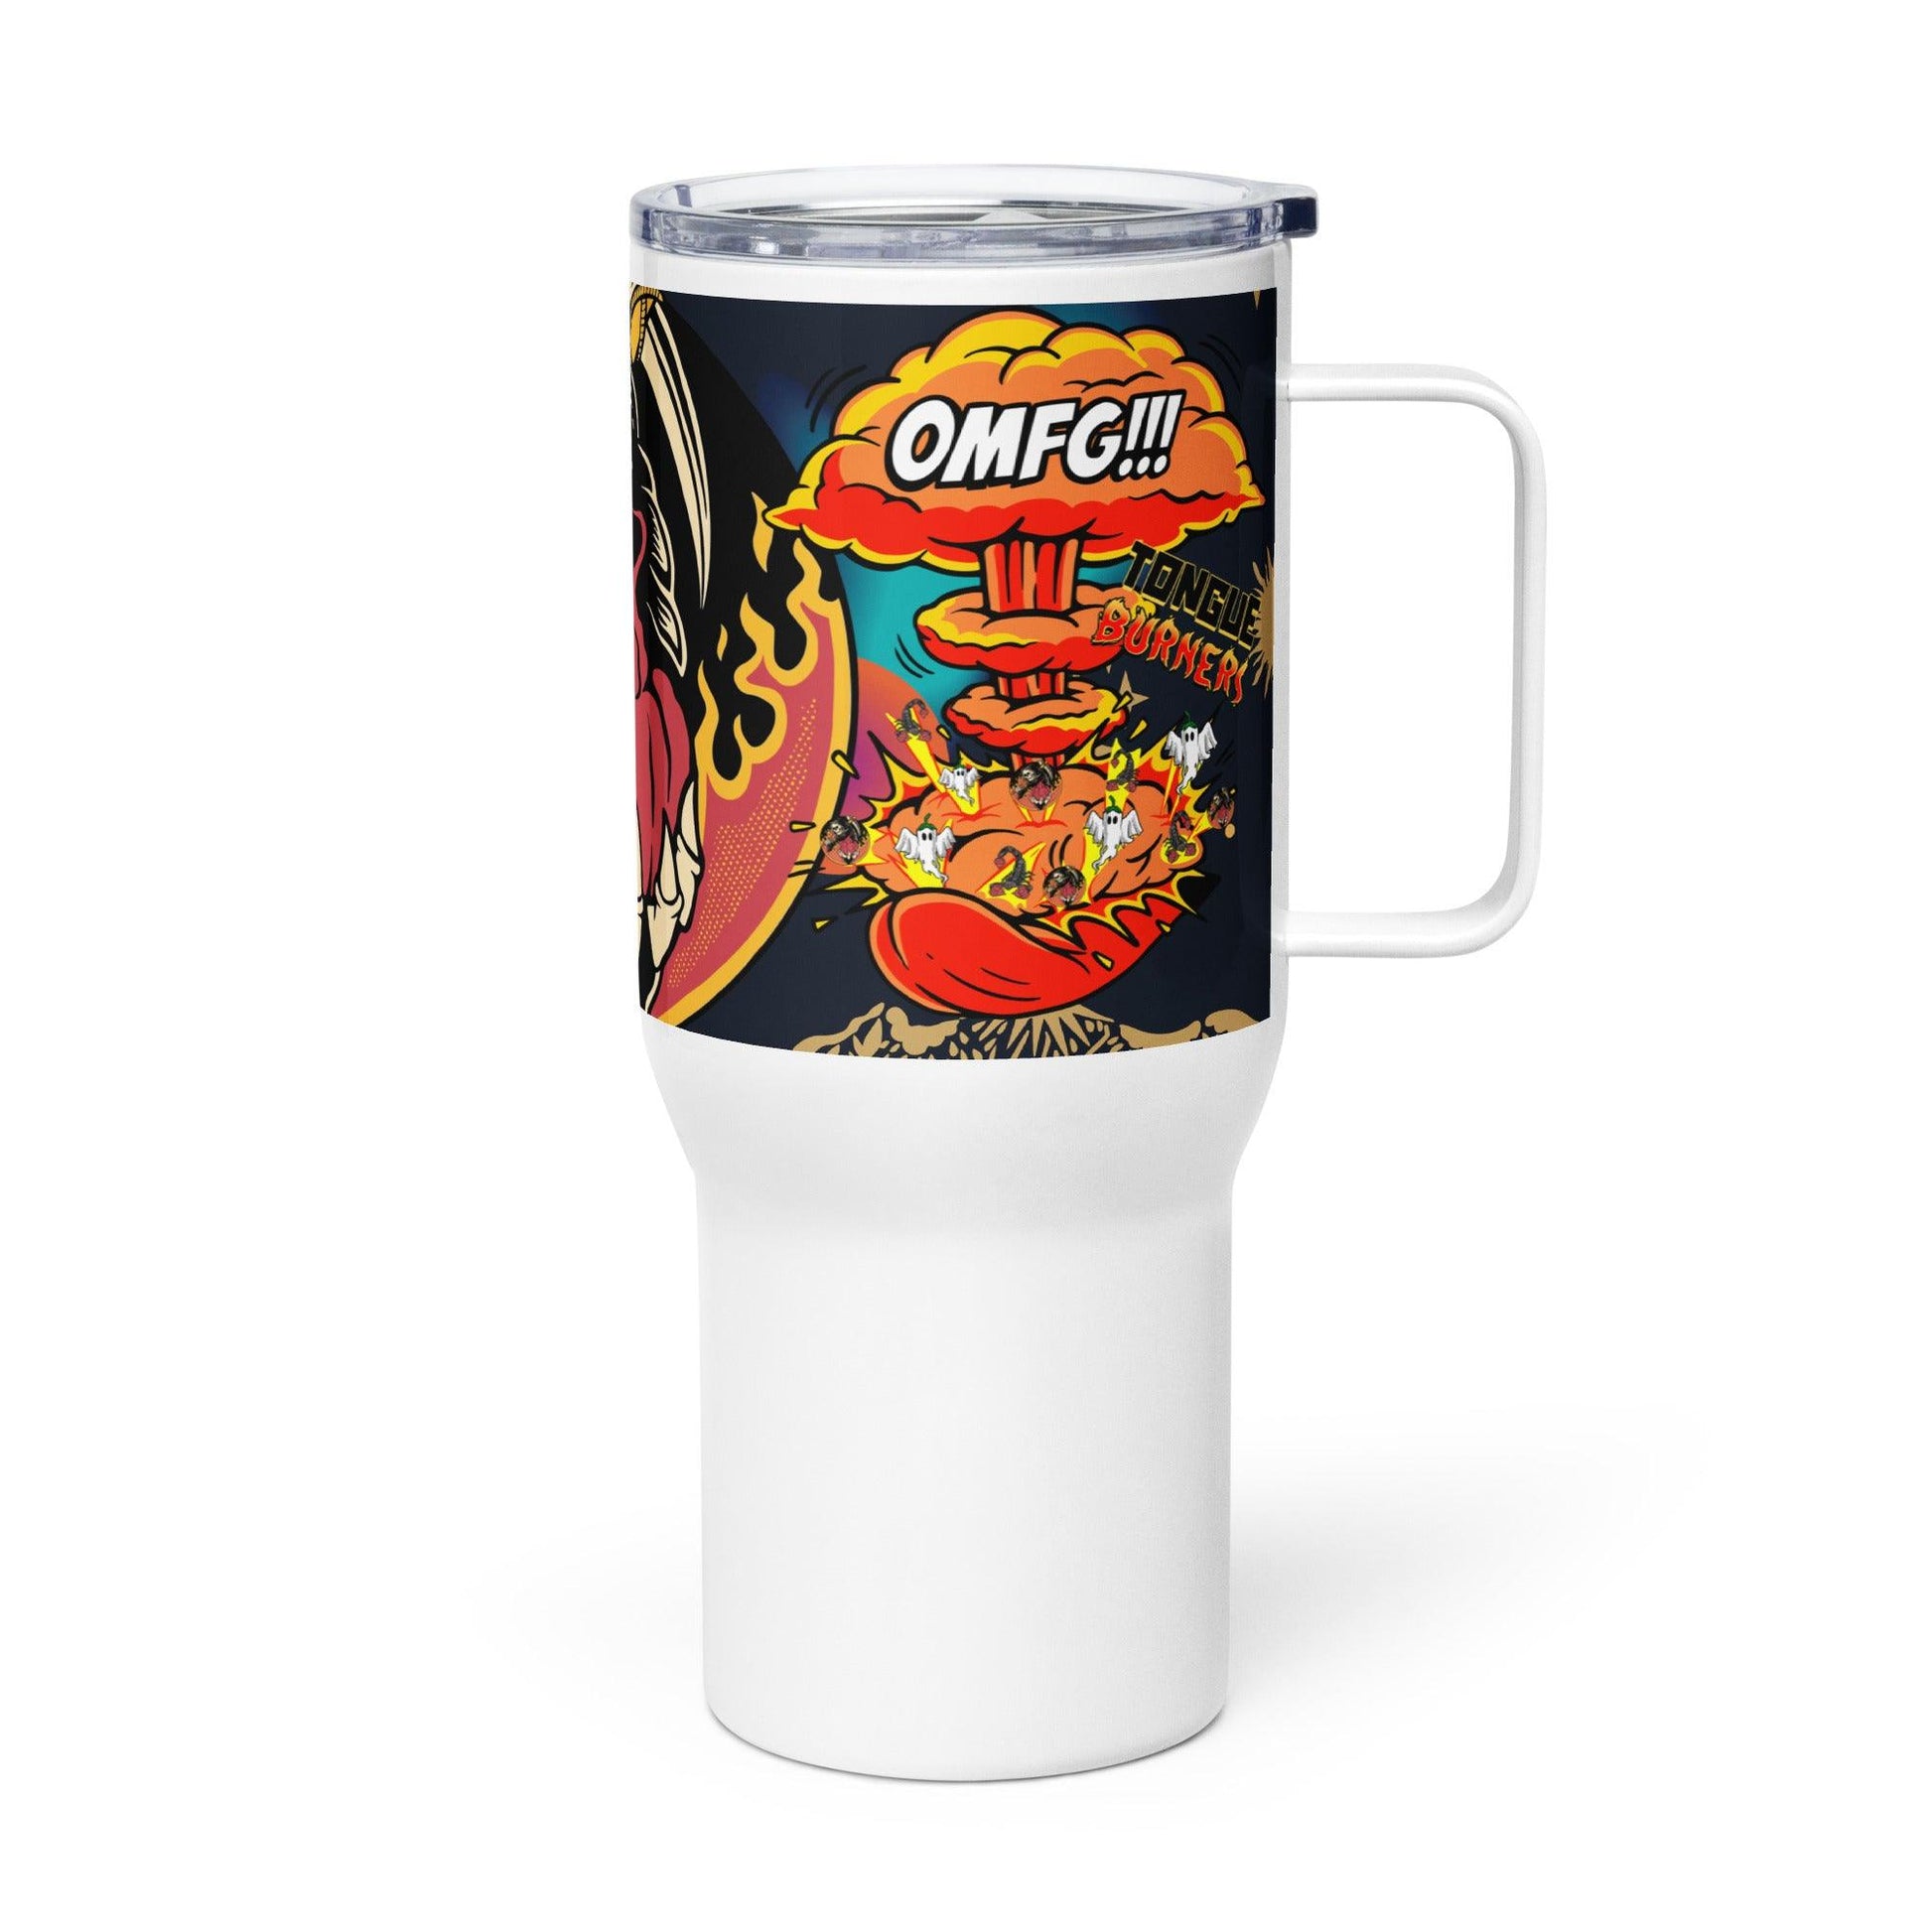 Travel mug with a handle - Tongue Burners Hot Sauce